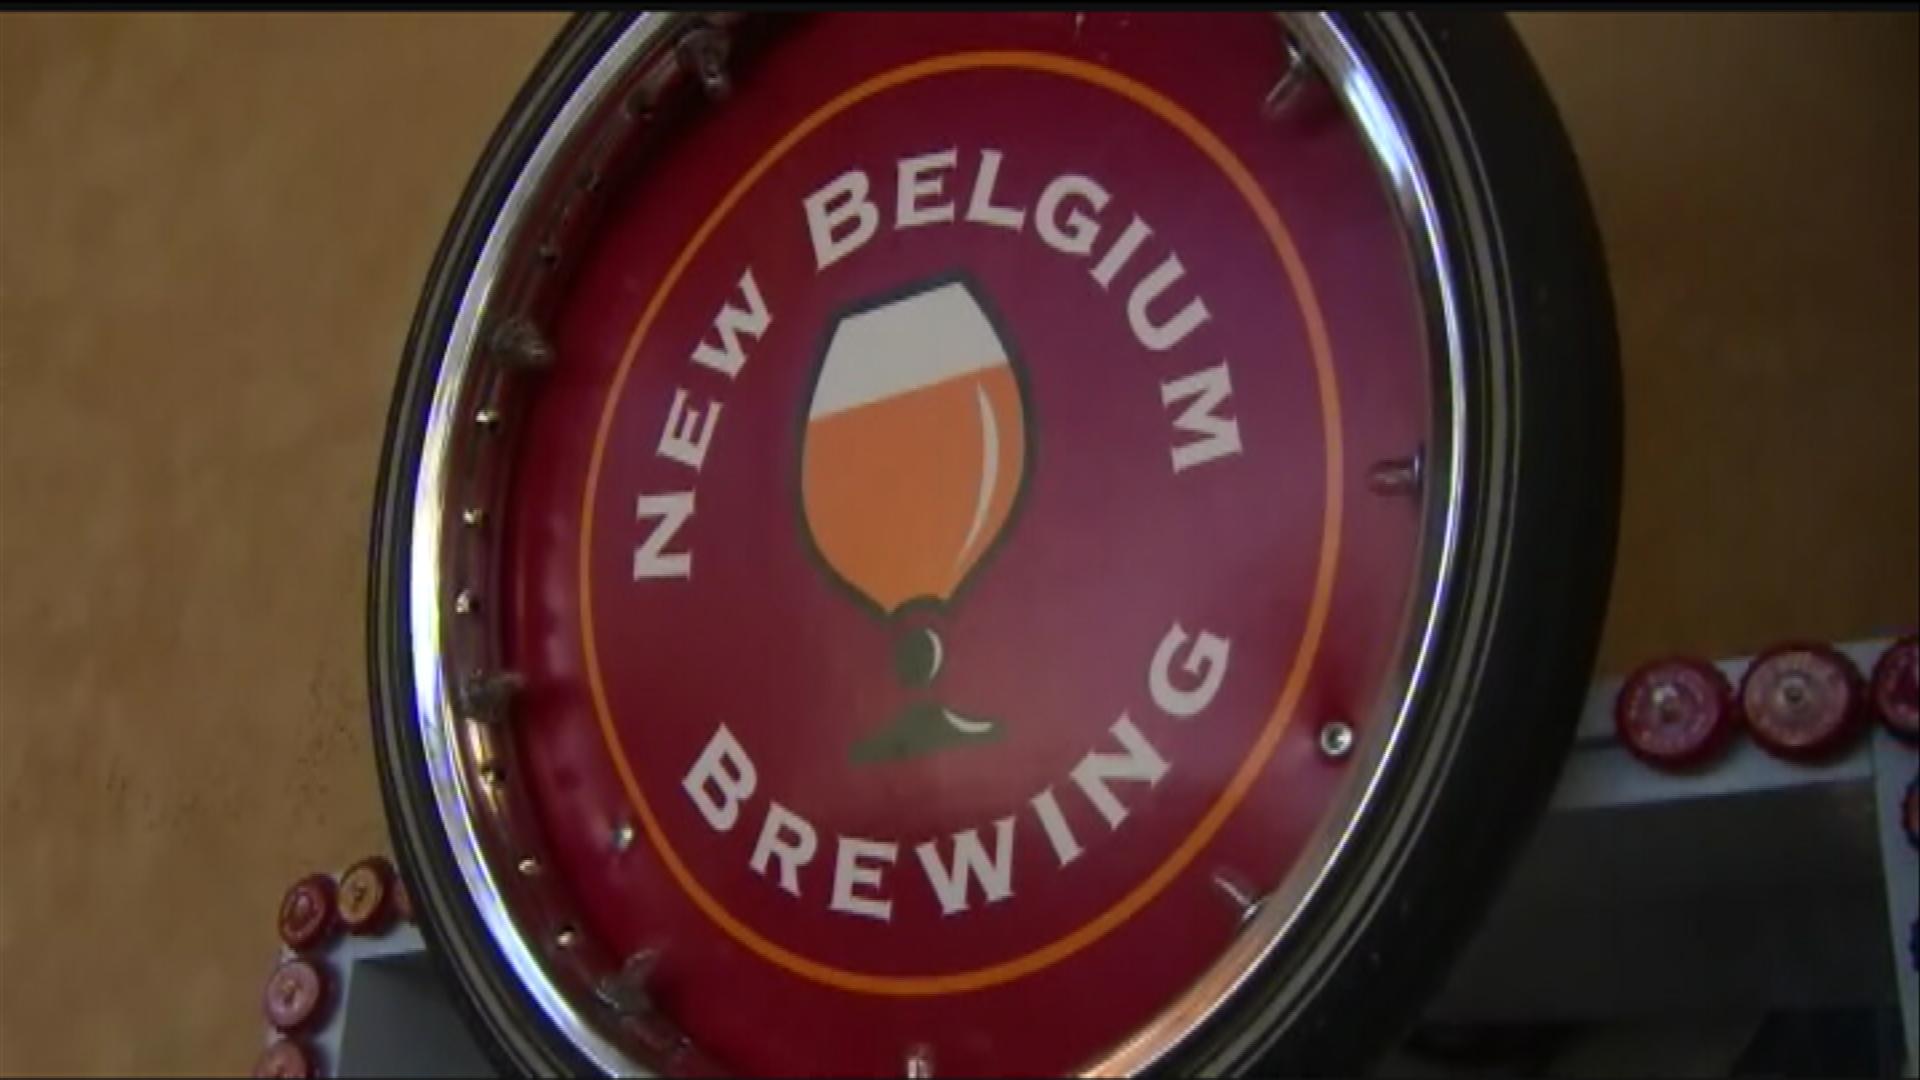 Australian-Based Lion Little World Beverages Acquires New Belgium Brewing